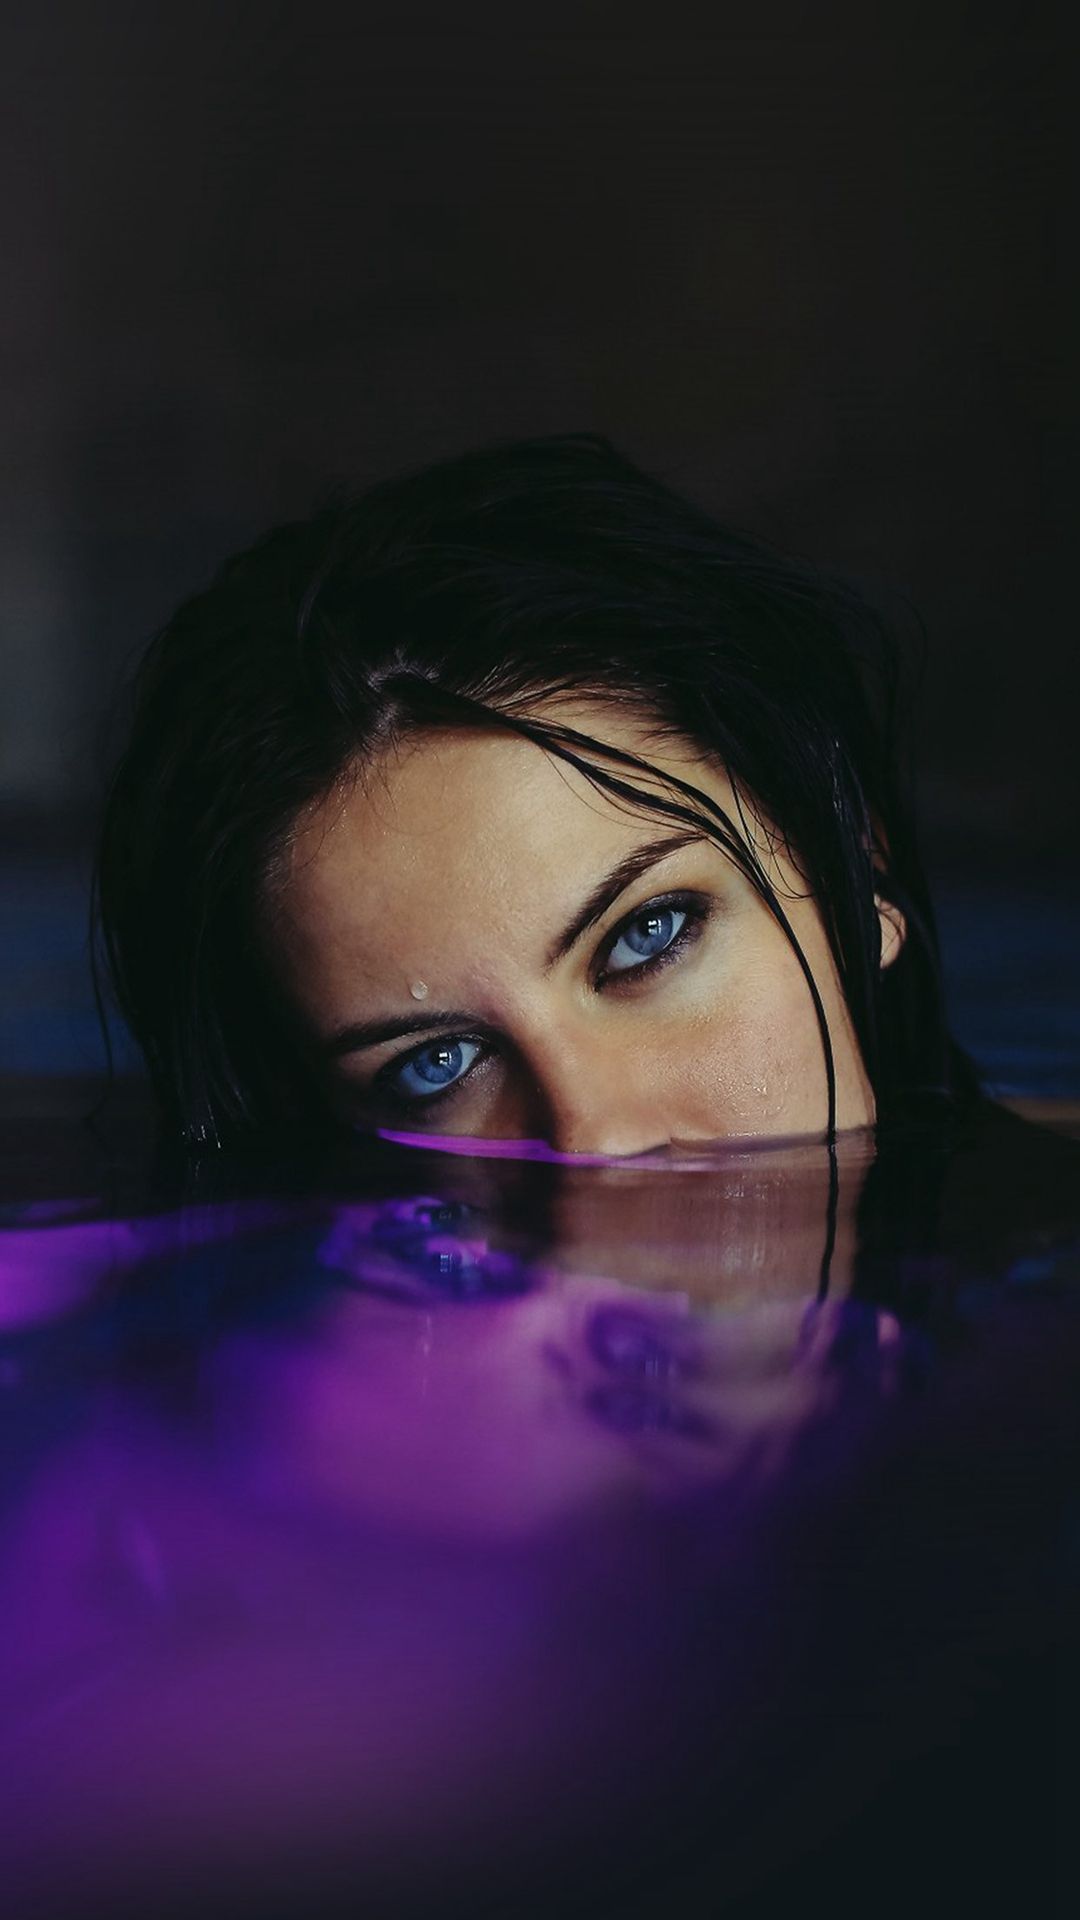 Girl Water Cute Dark Blue iPhone 6 Wallpaper Download | iPhone ...